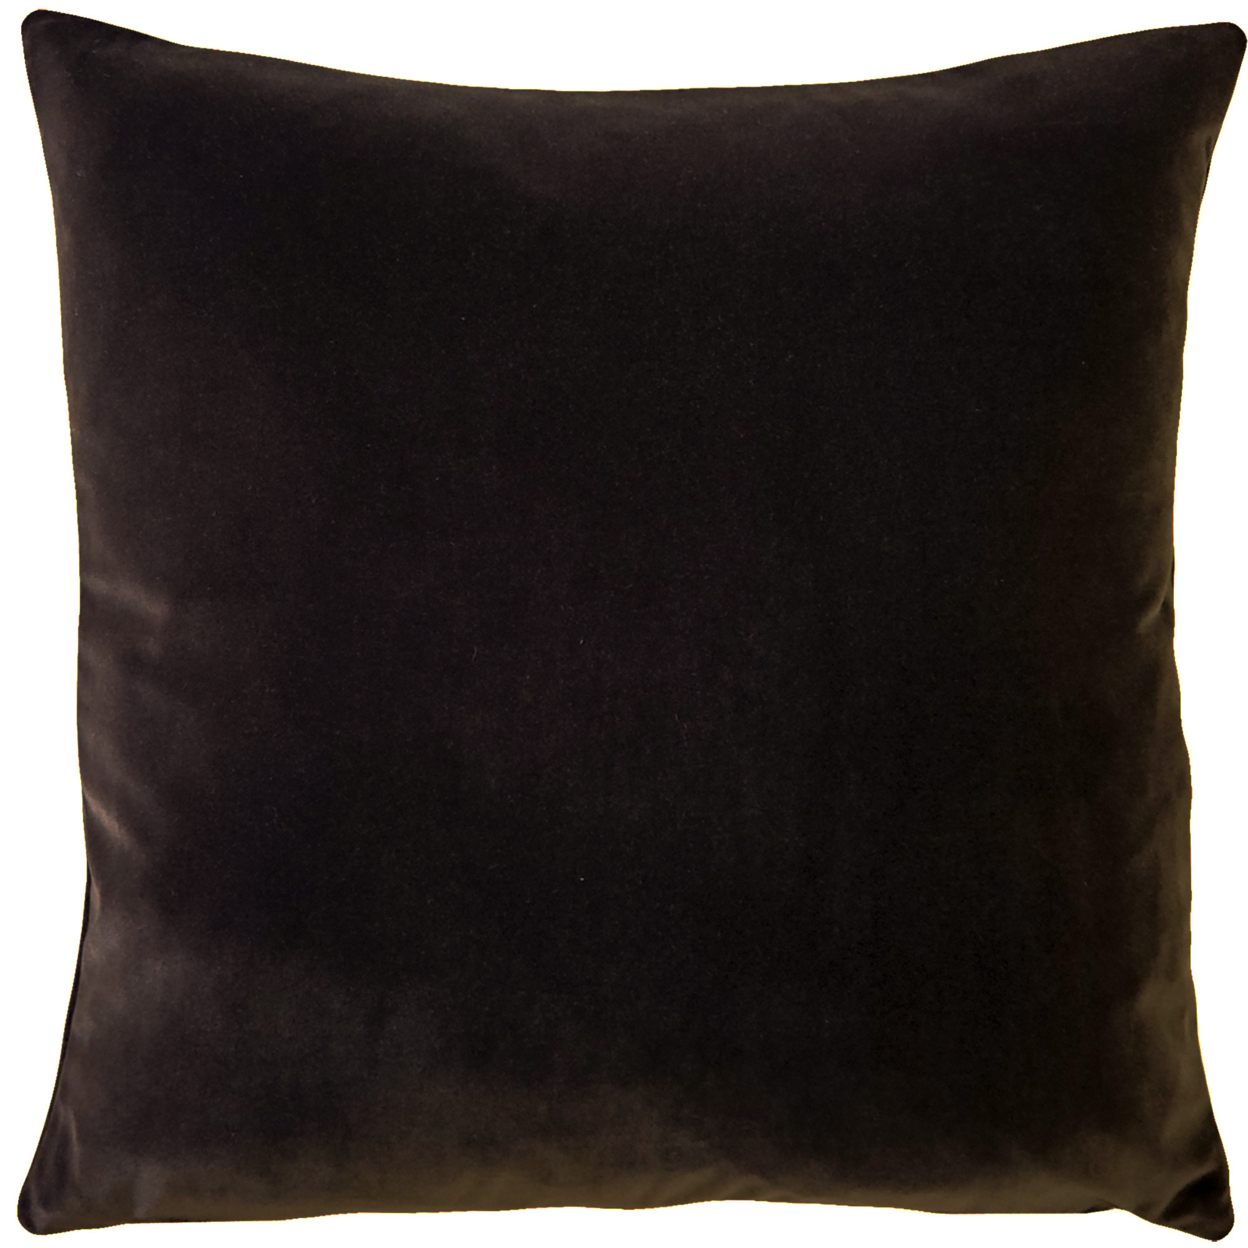 Castello Velvet Throw Pillows, Complete Pillow With Polyfill Pillow Insert (18 Colors, 3 Sizes) - Summer Green, 12x20